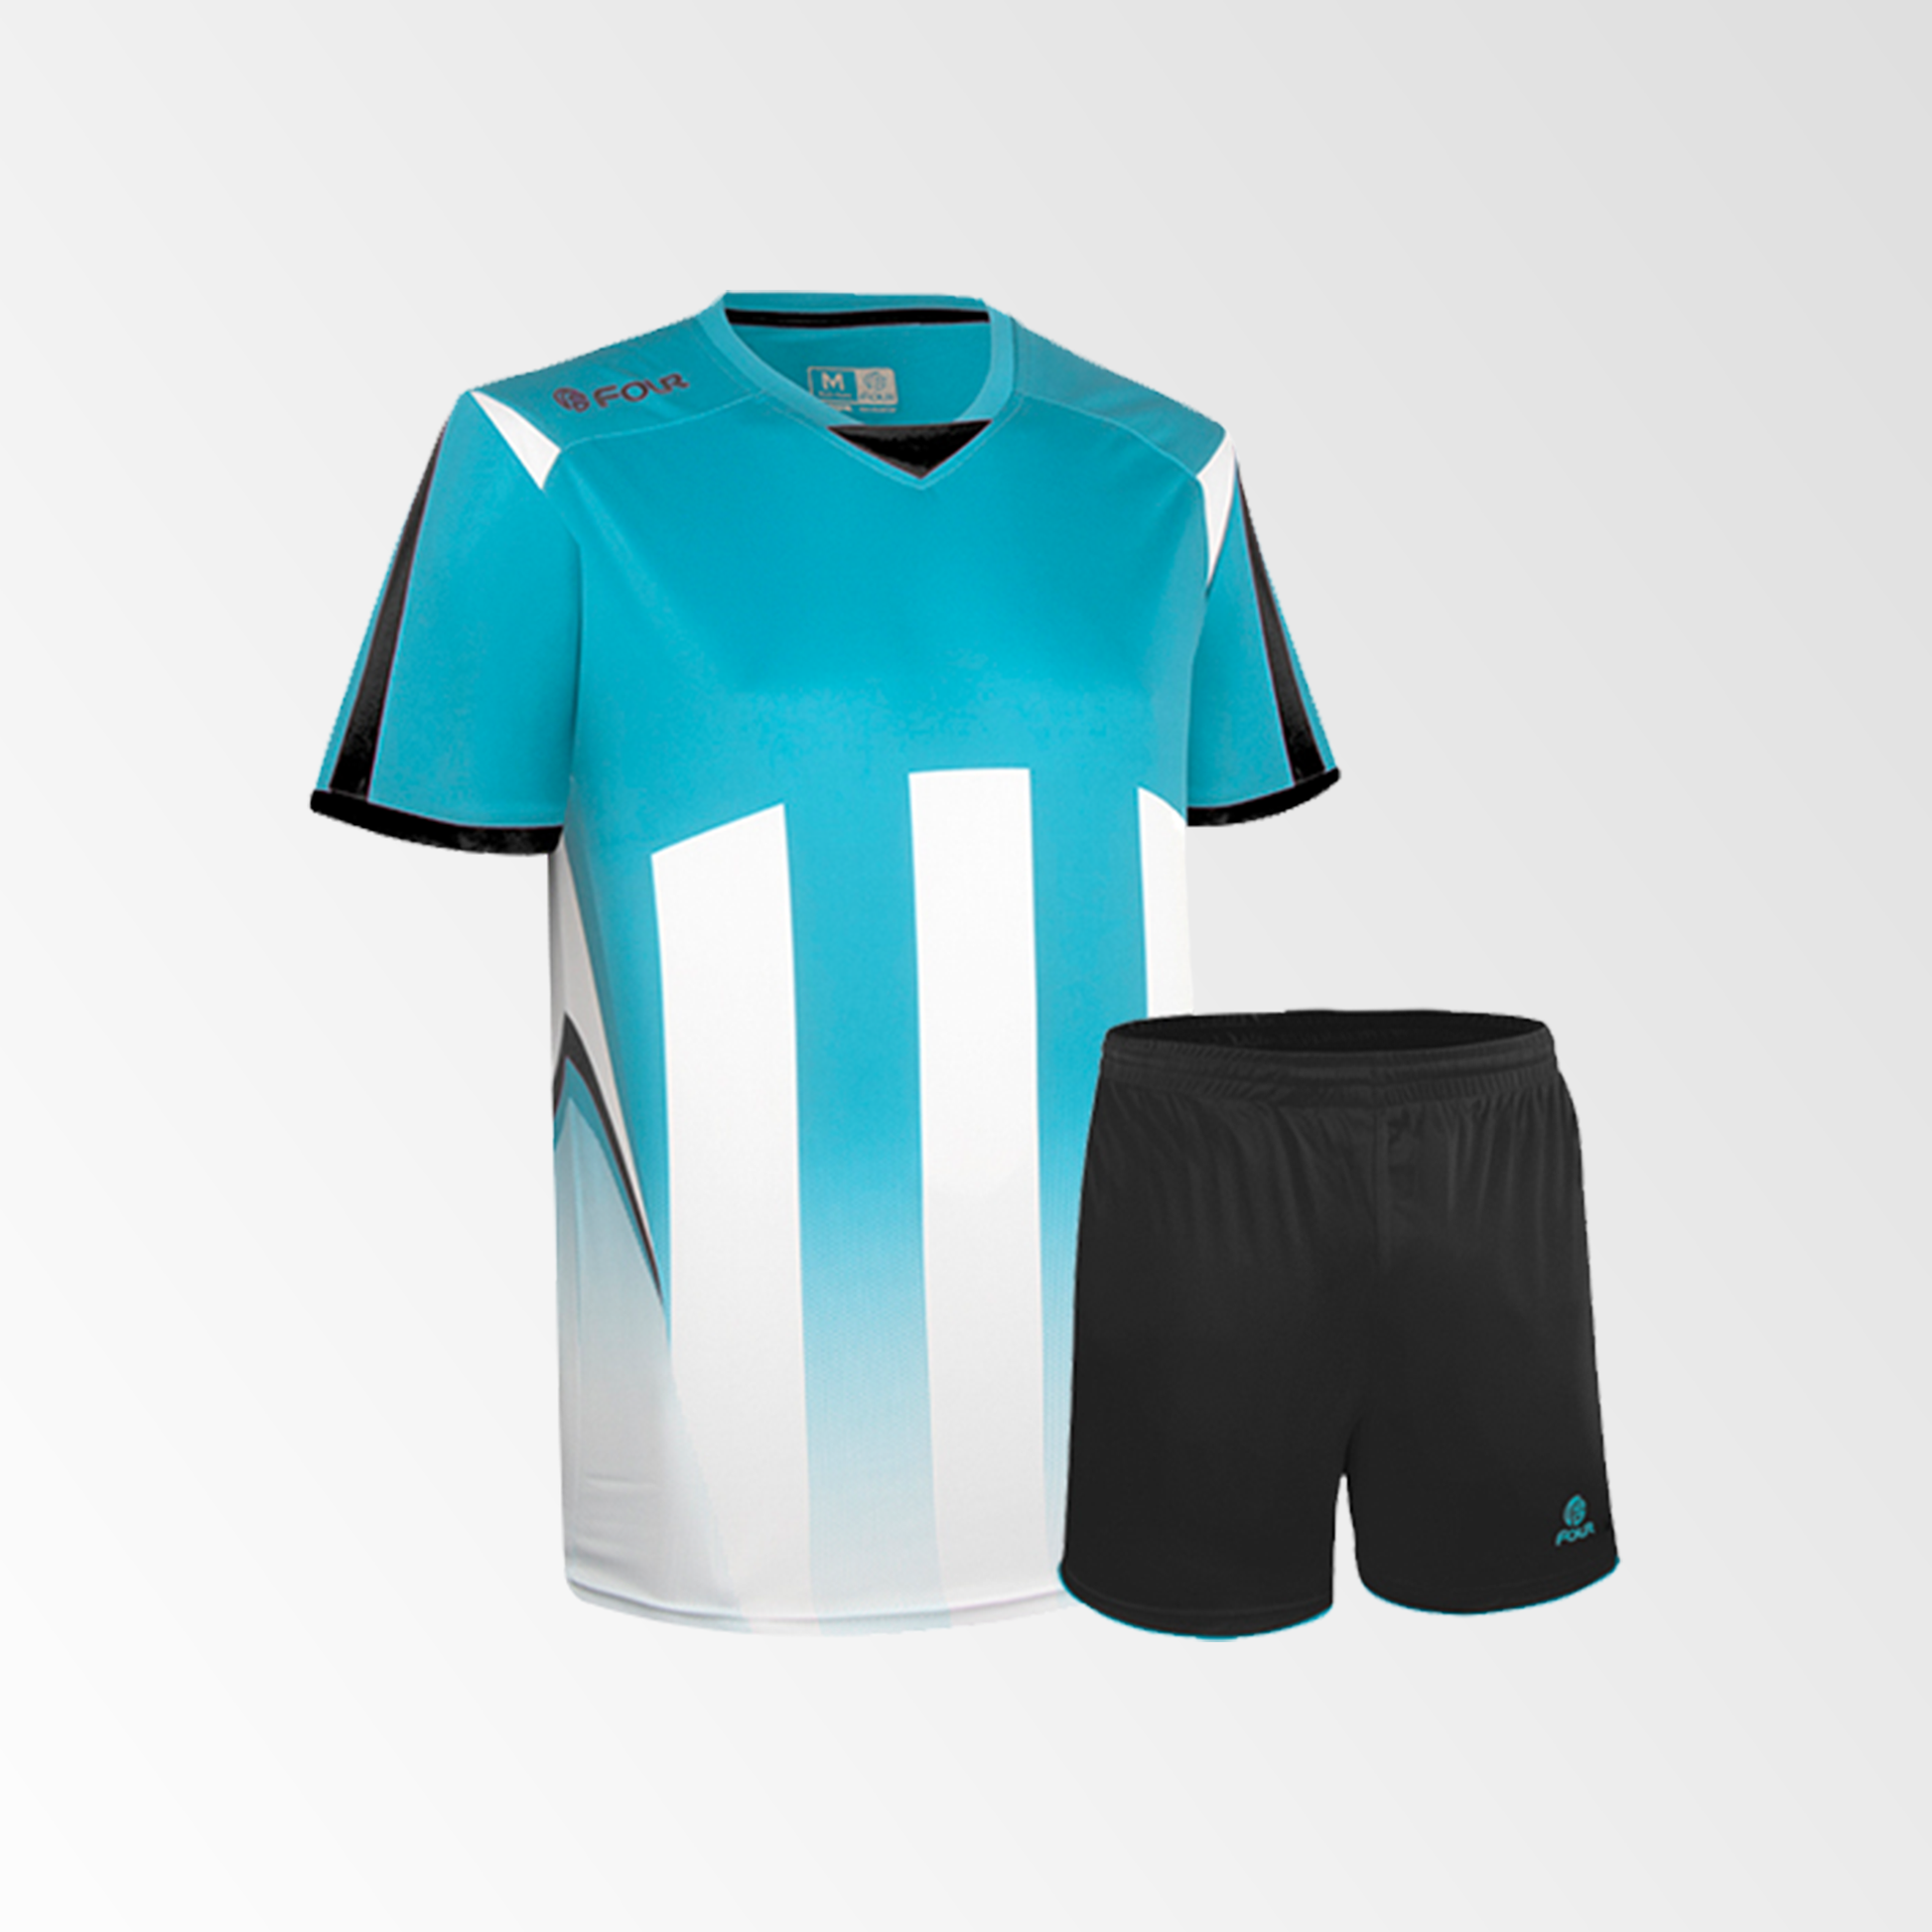 Camiseta de Futbol y Short Modelo Watford Celeste Negro Blanco – Tienda Four